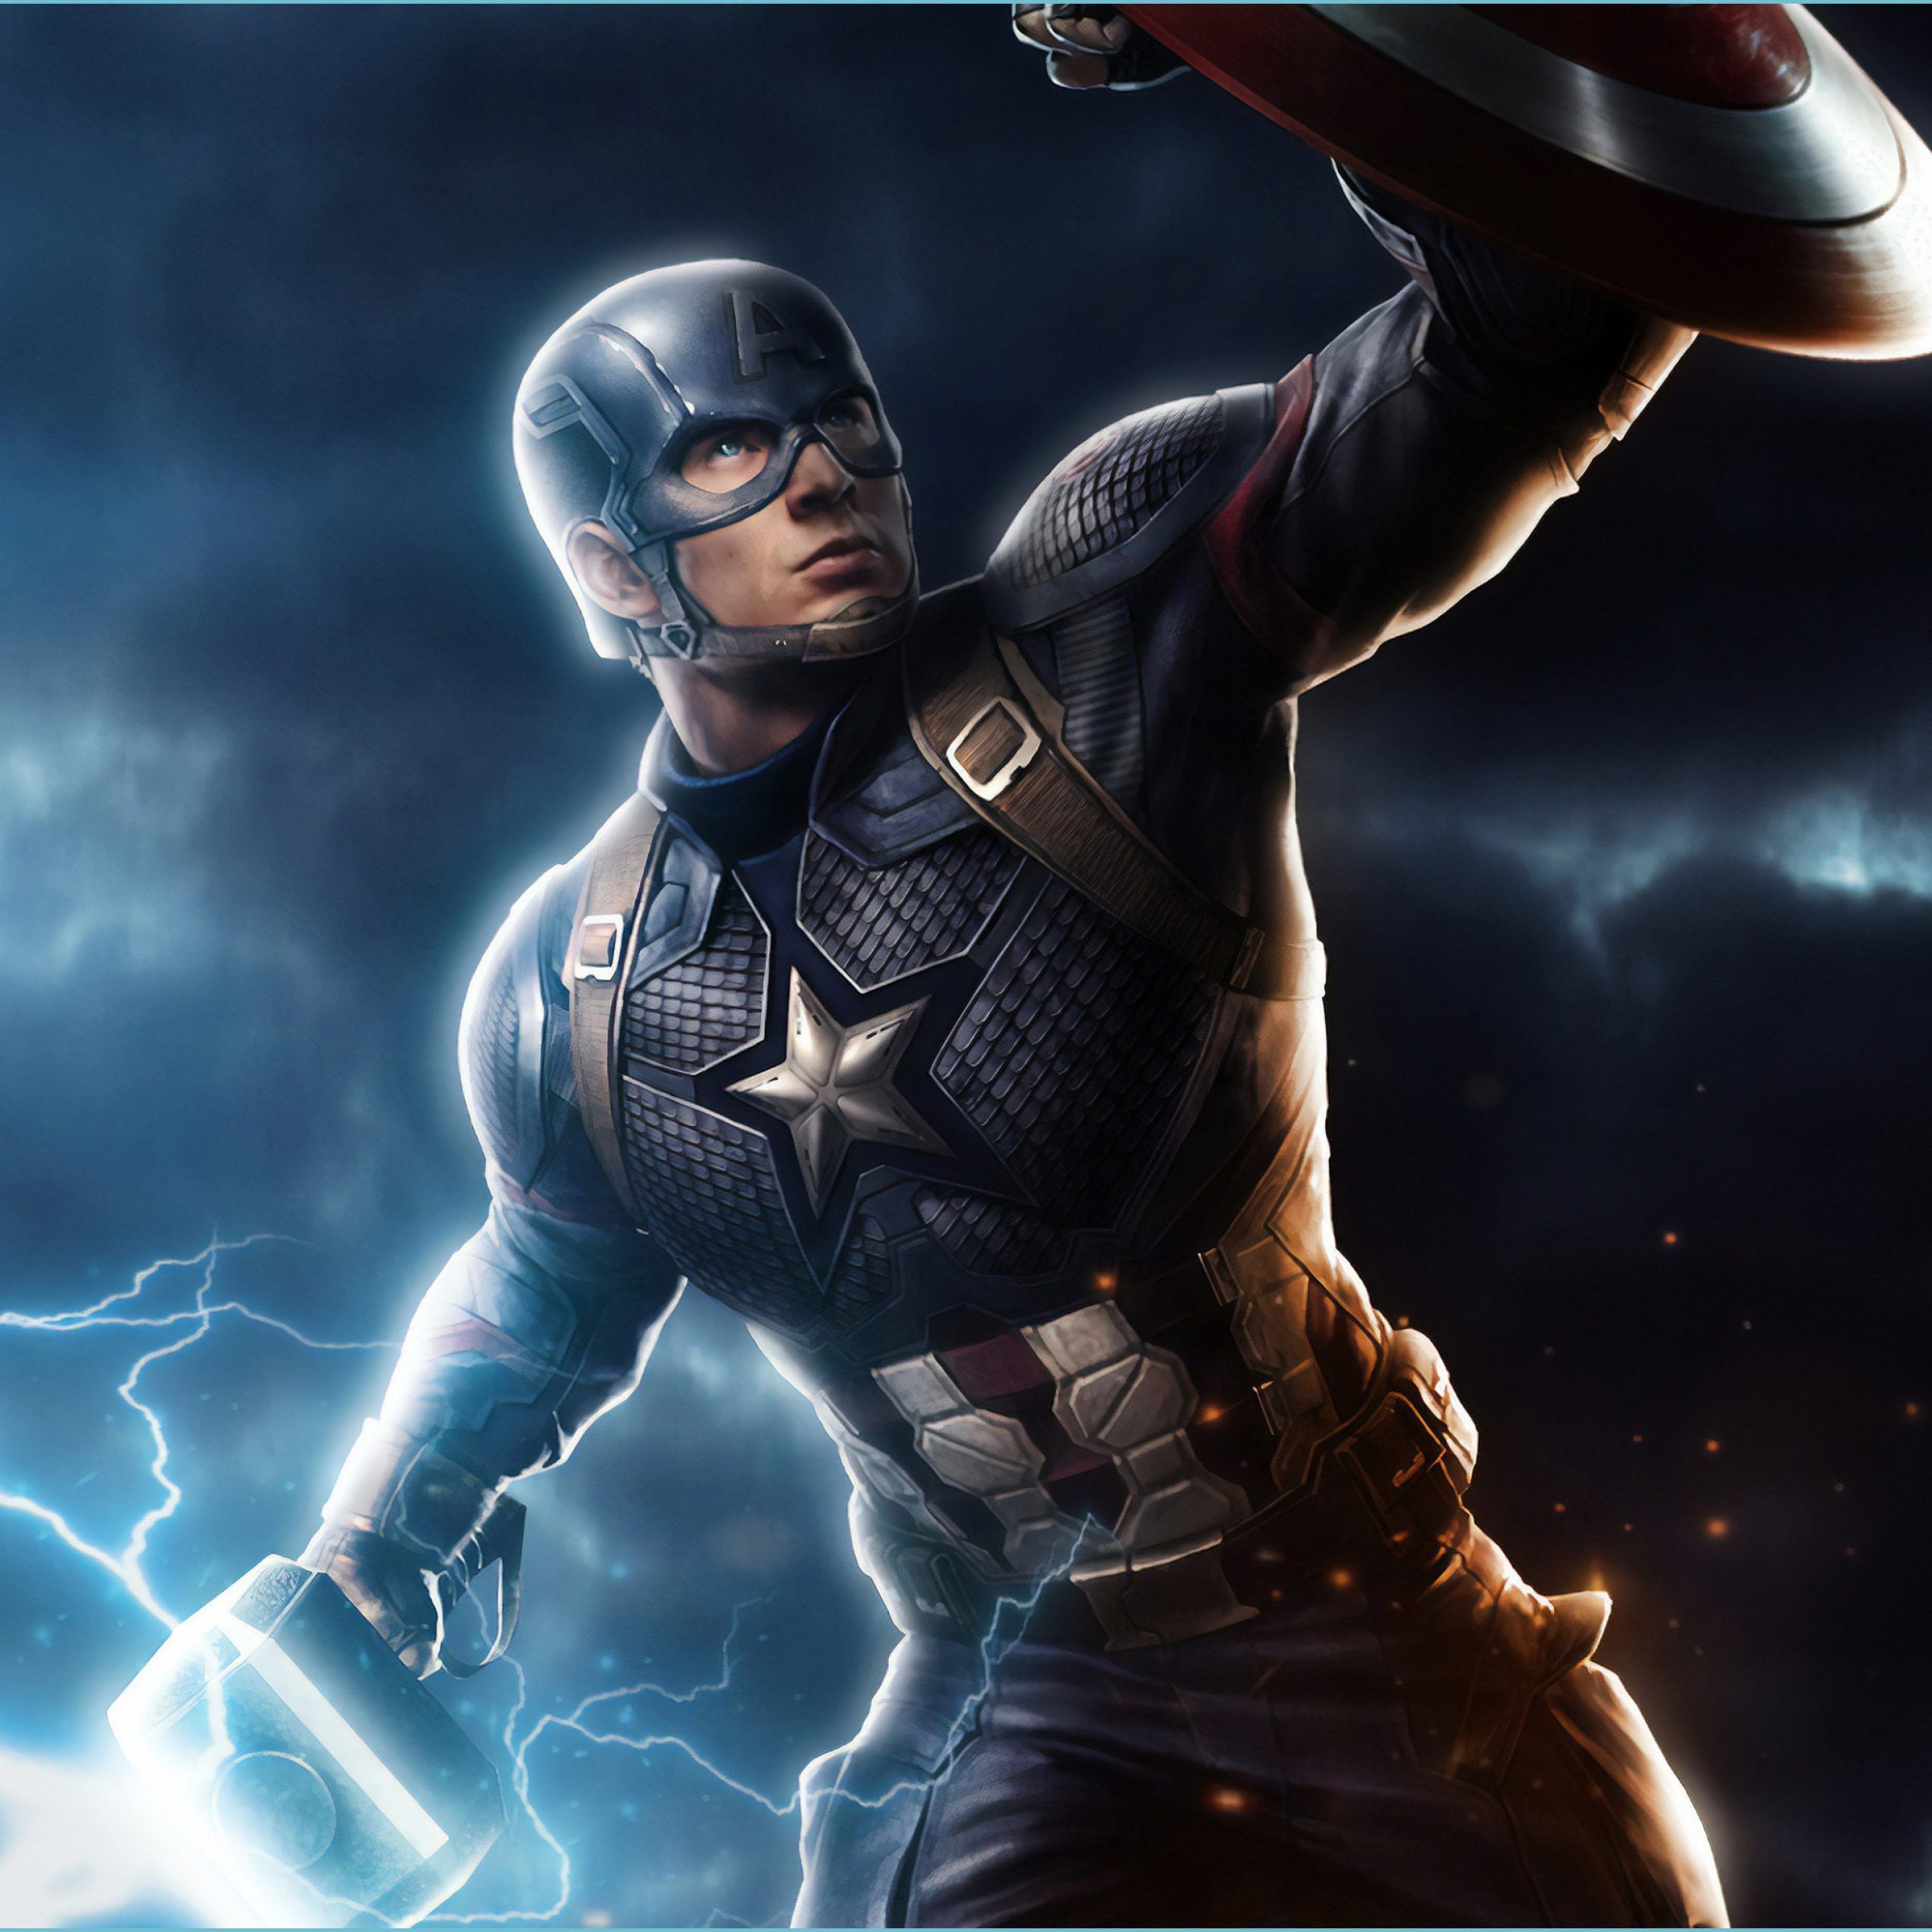 Captain America Endgame 4k Wallpapers - Wallpaper Cave